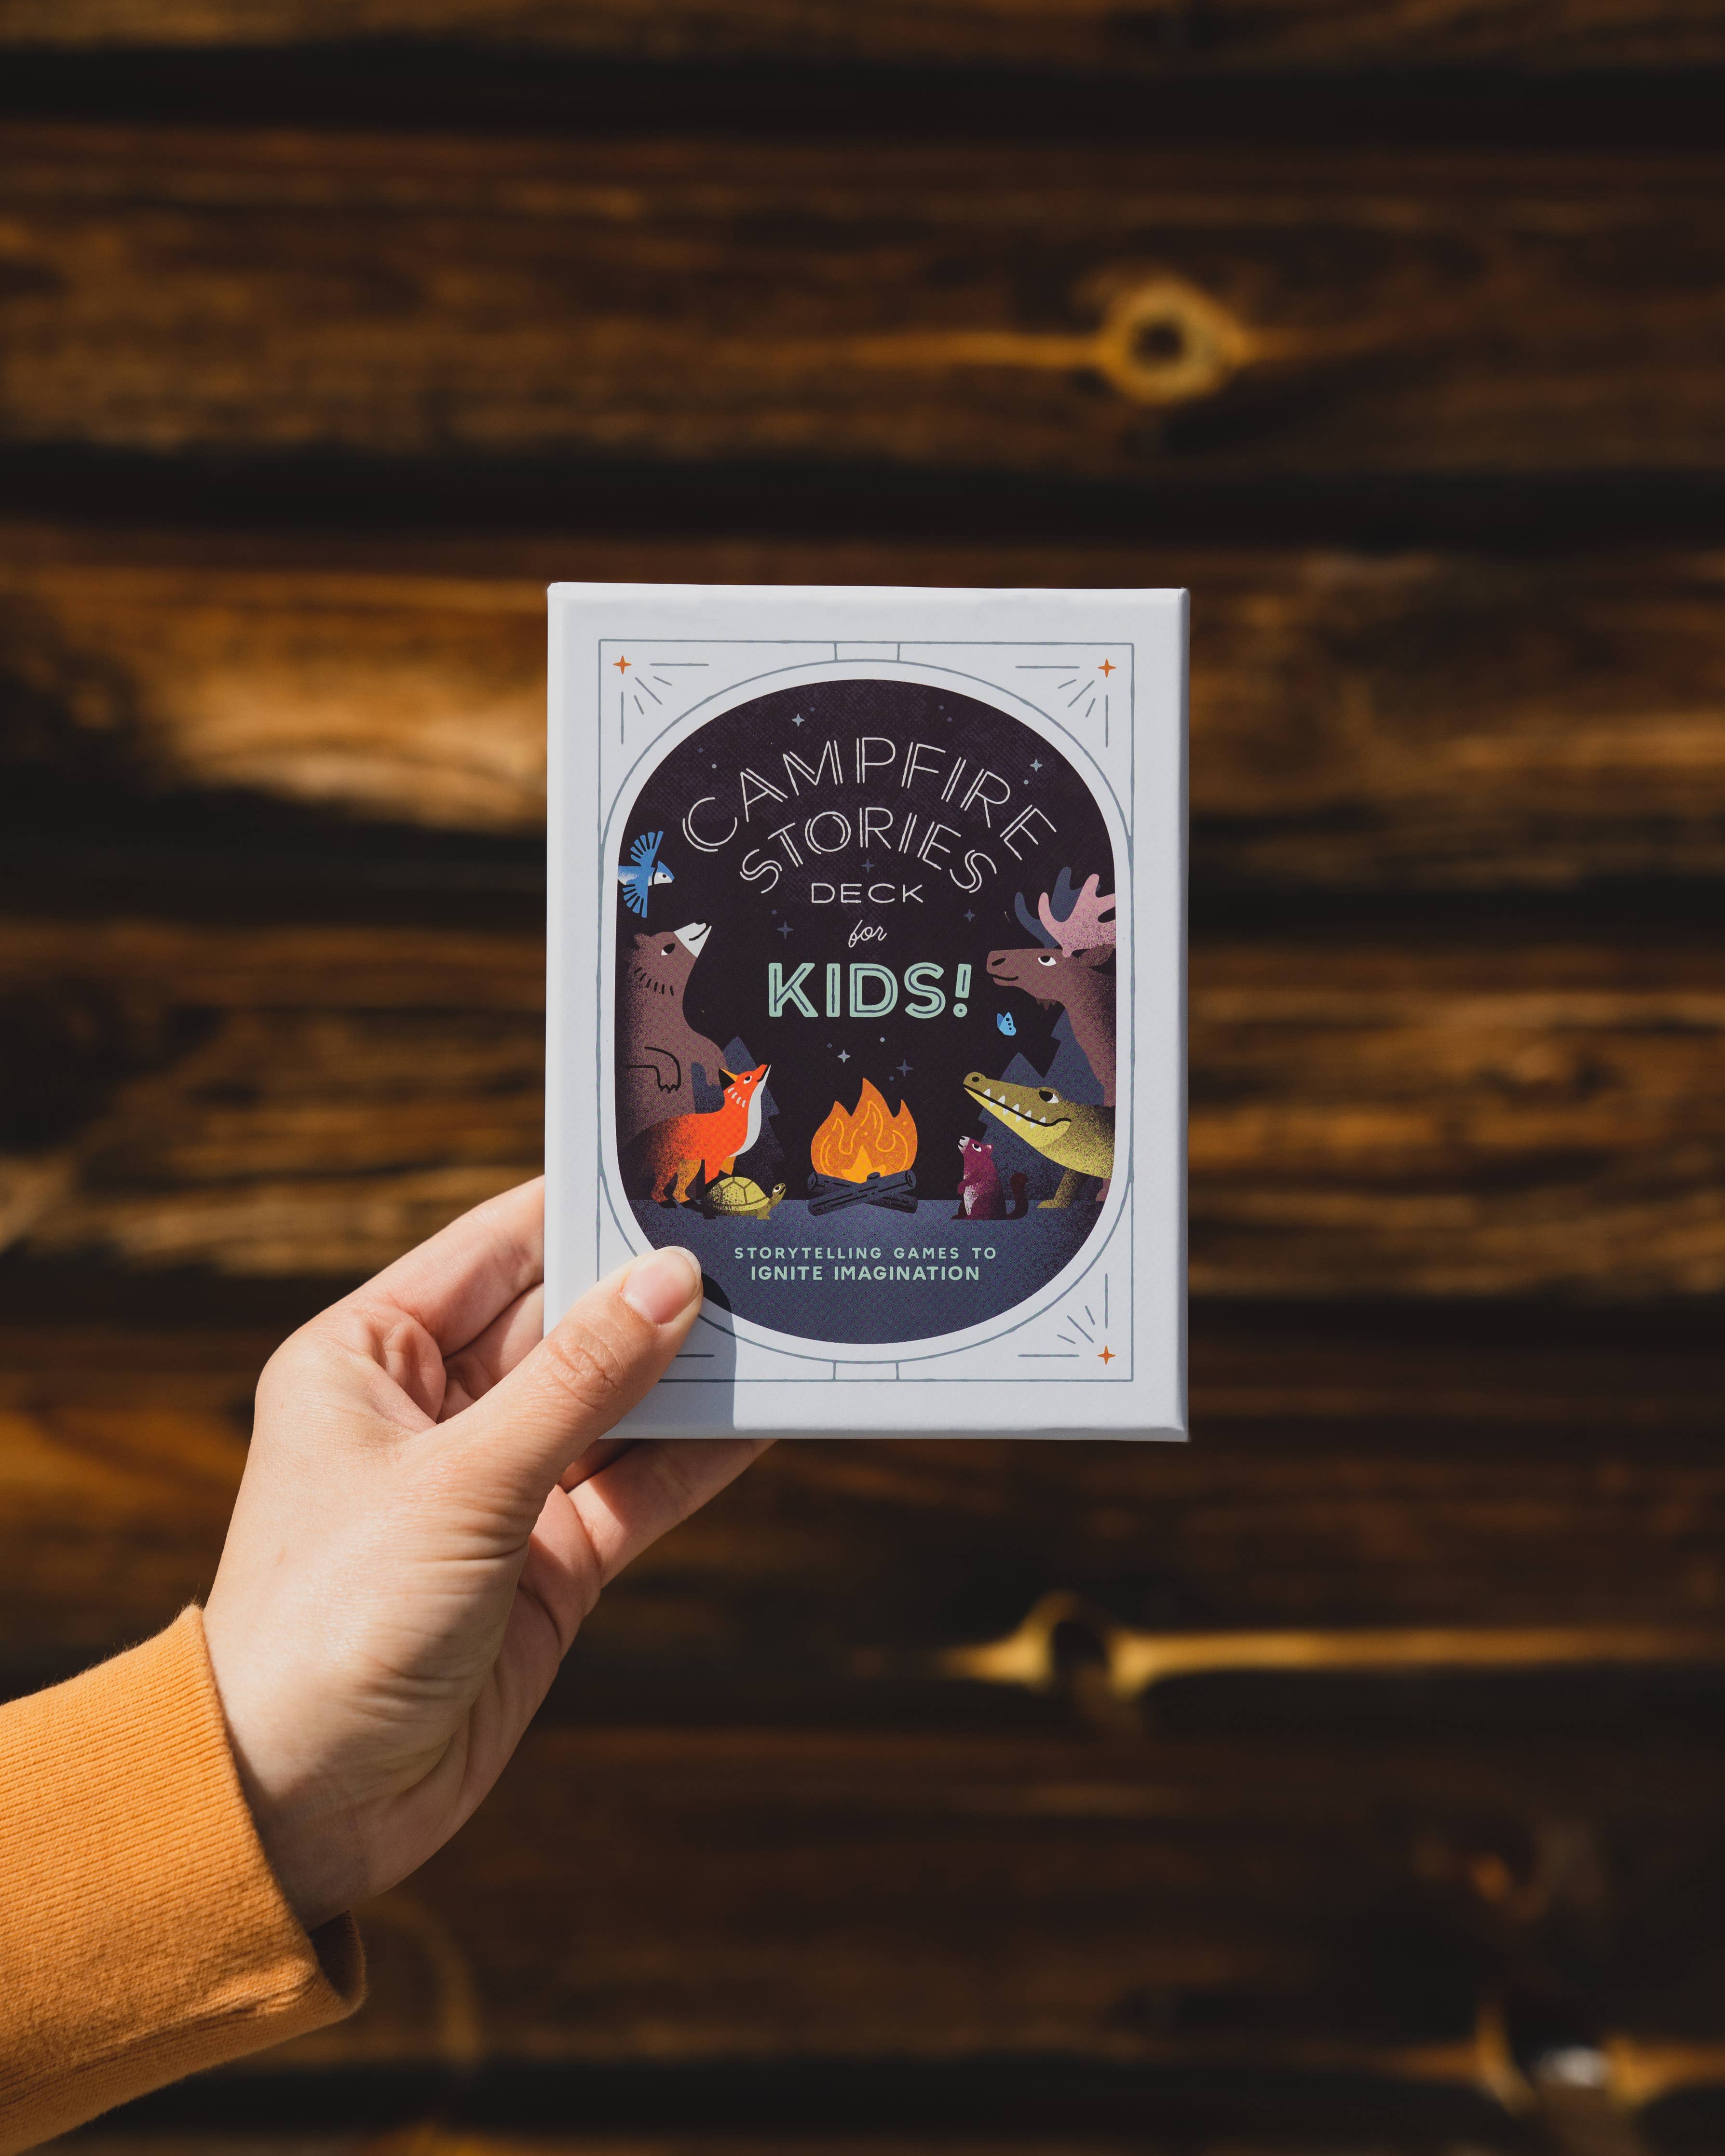 Campfire Stories Deck – For Kids!